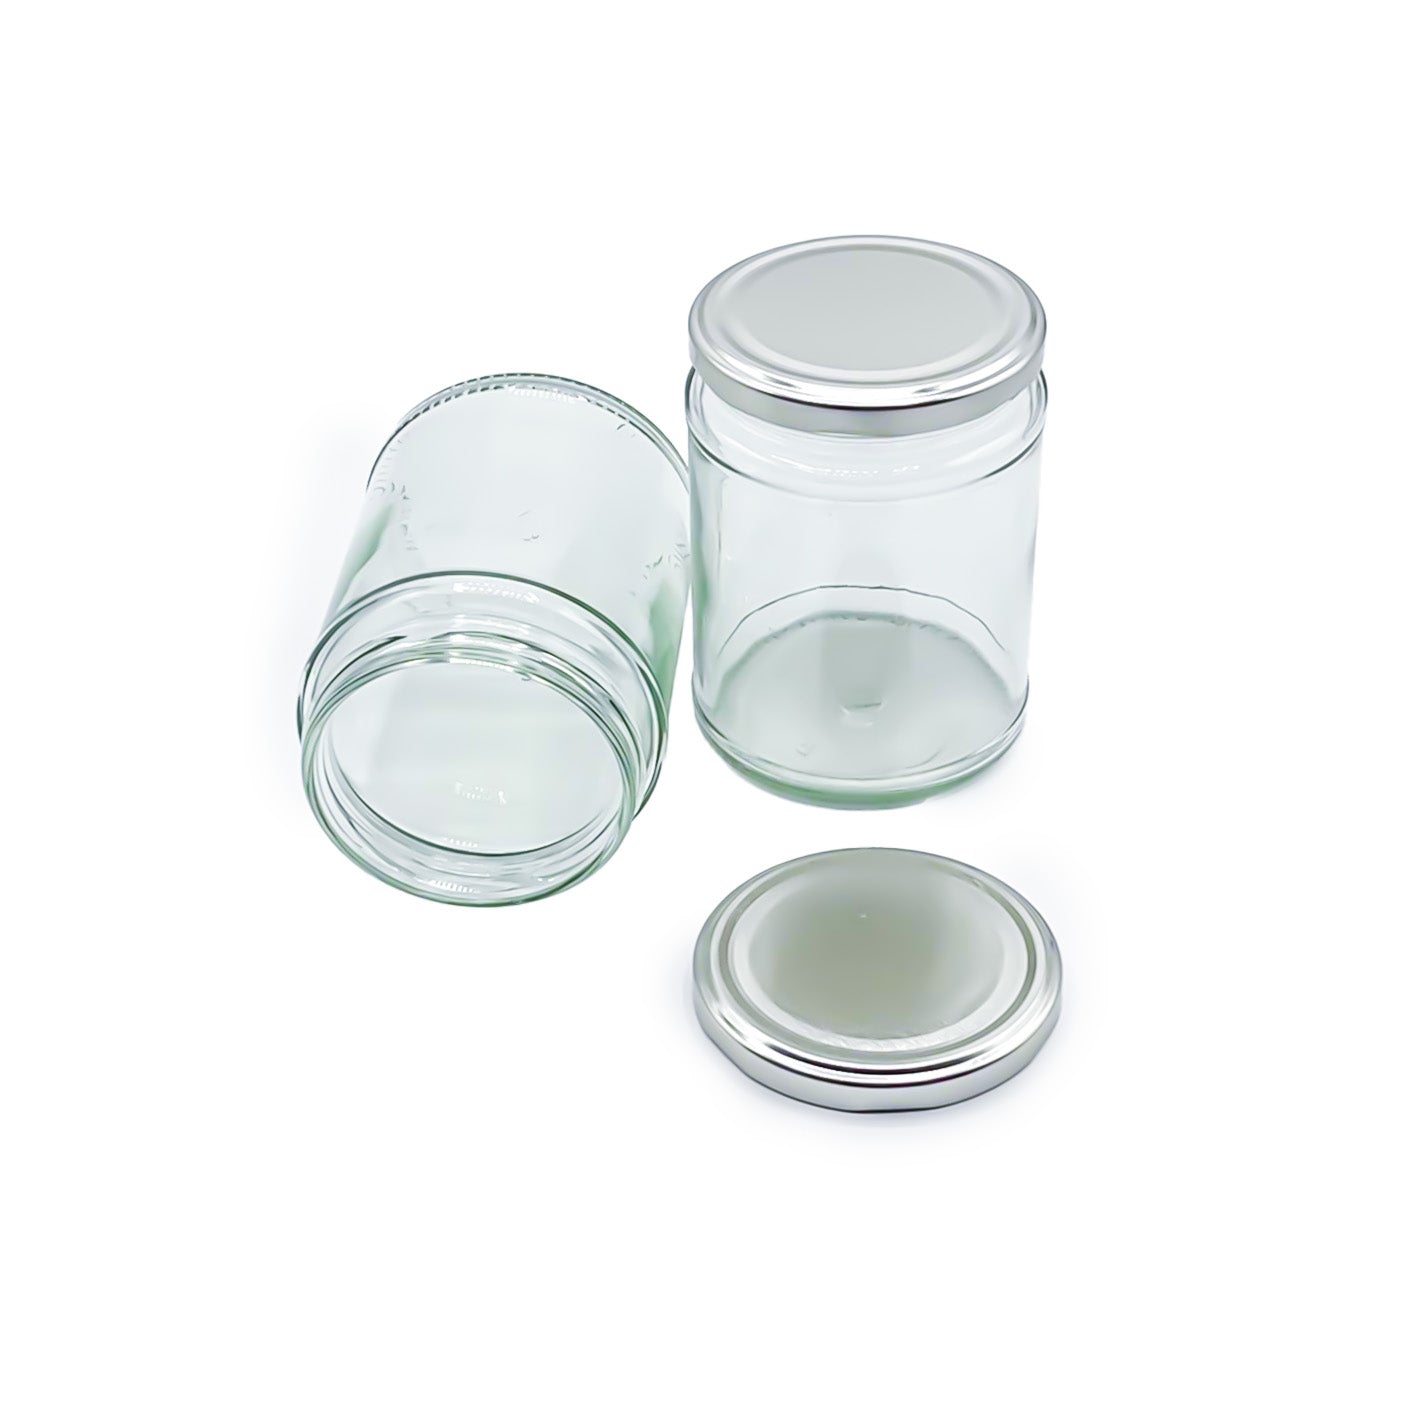 500ml Glass Jars Preserving Food Jars with Twist off Locking Silver Lids - 12 Pack